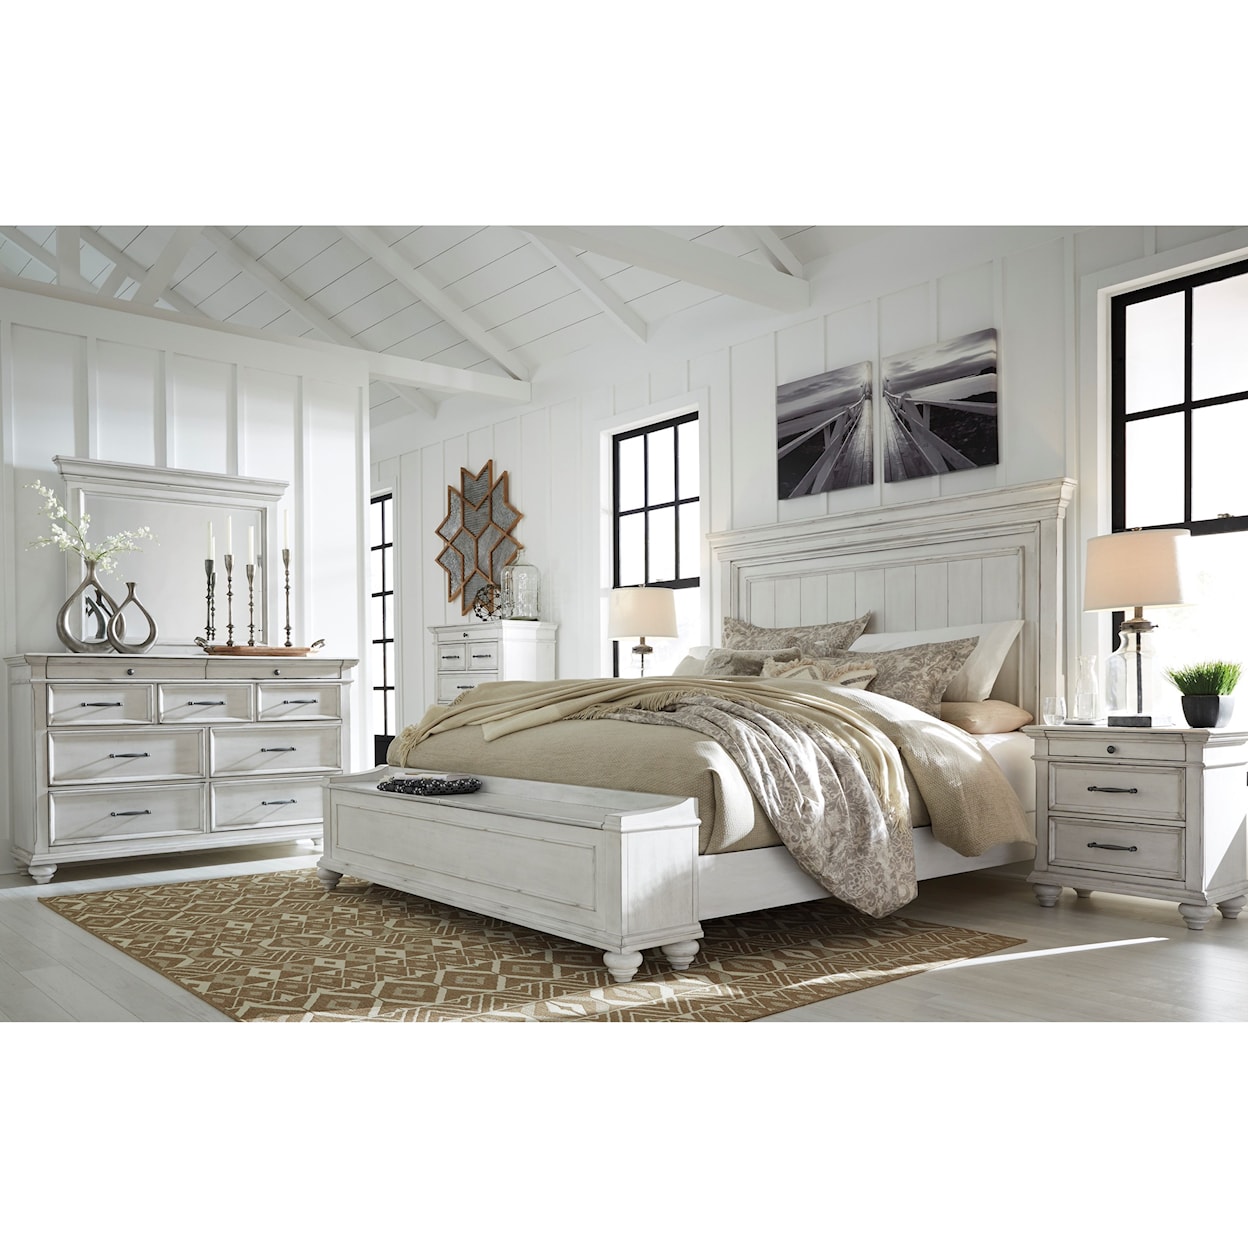 Ashley Furniture Benchcraft Kanwyn King Bedroom Group